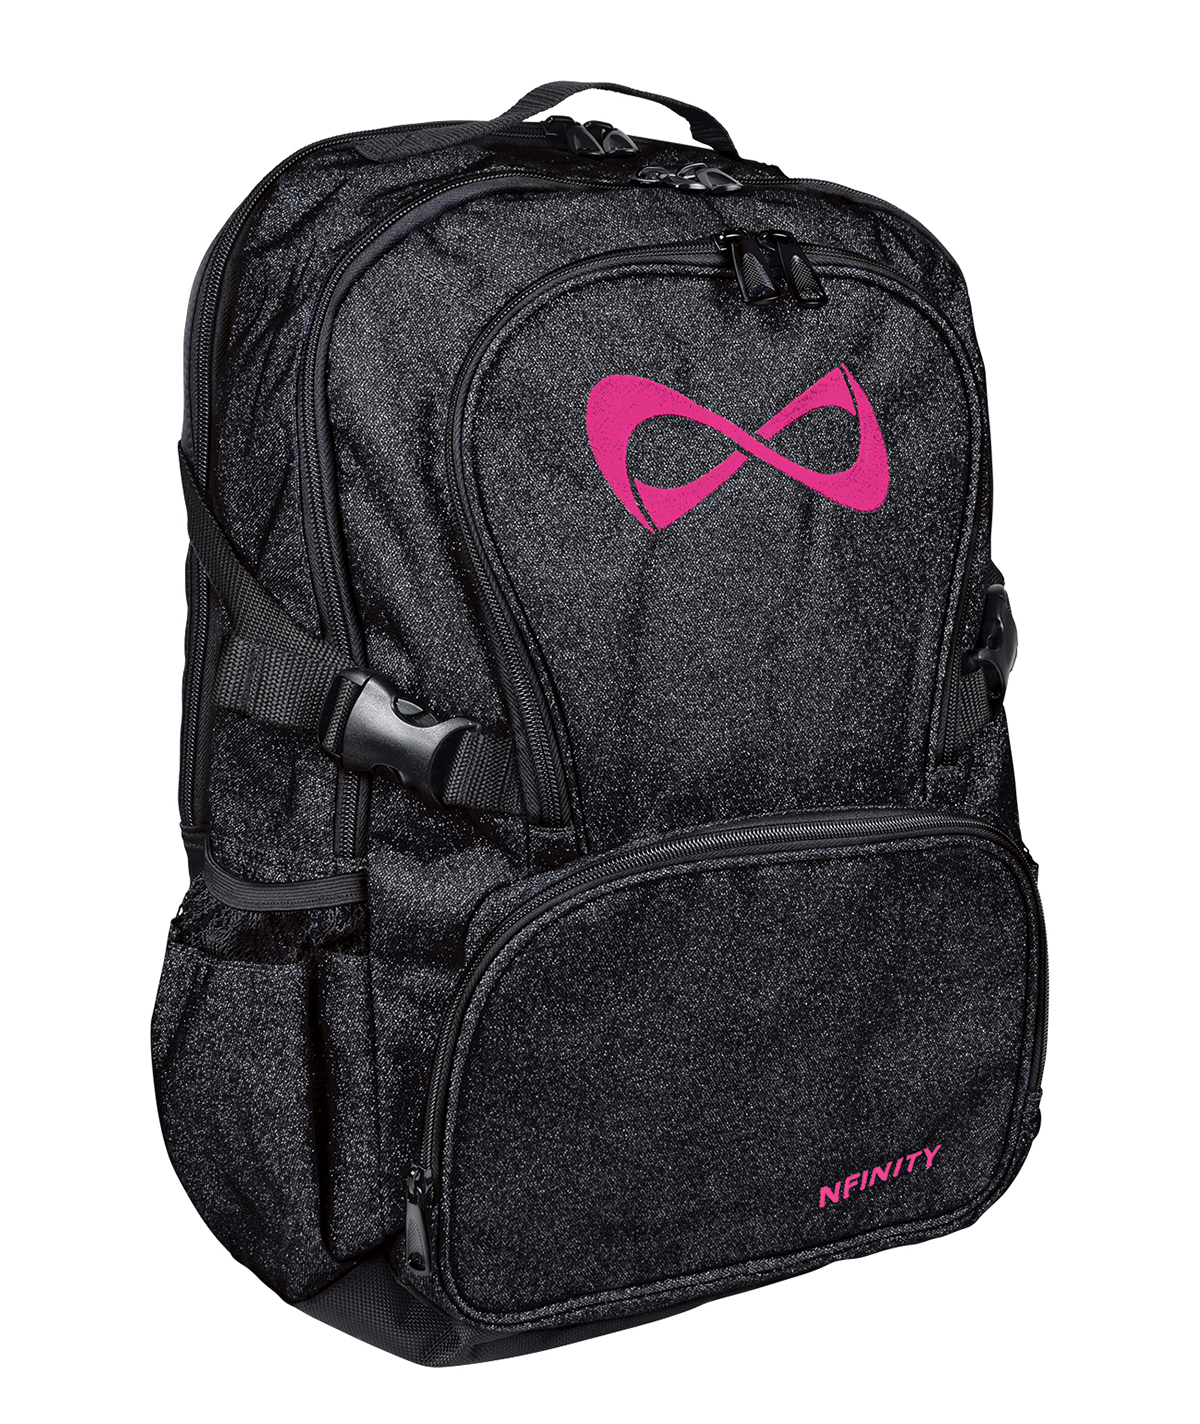 nfinity petite sparkle backpack Online Sale